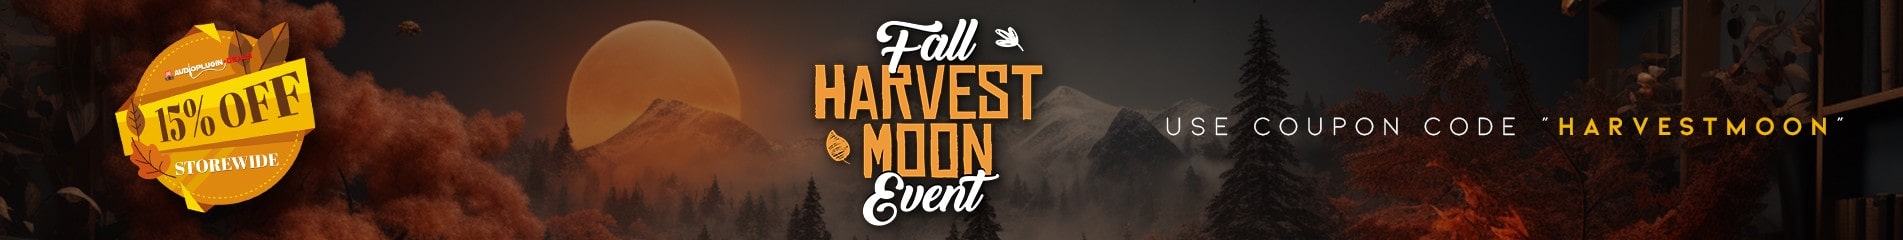 Audio Plugin Deals Harvest Moon Event